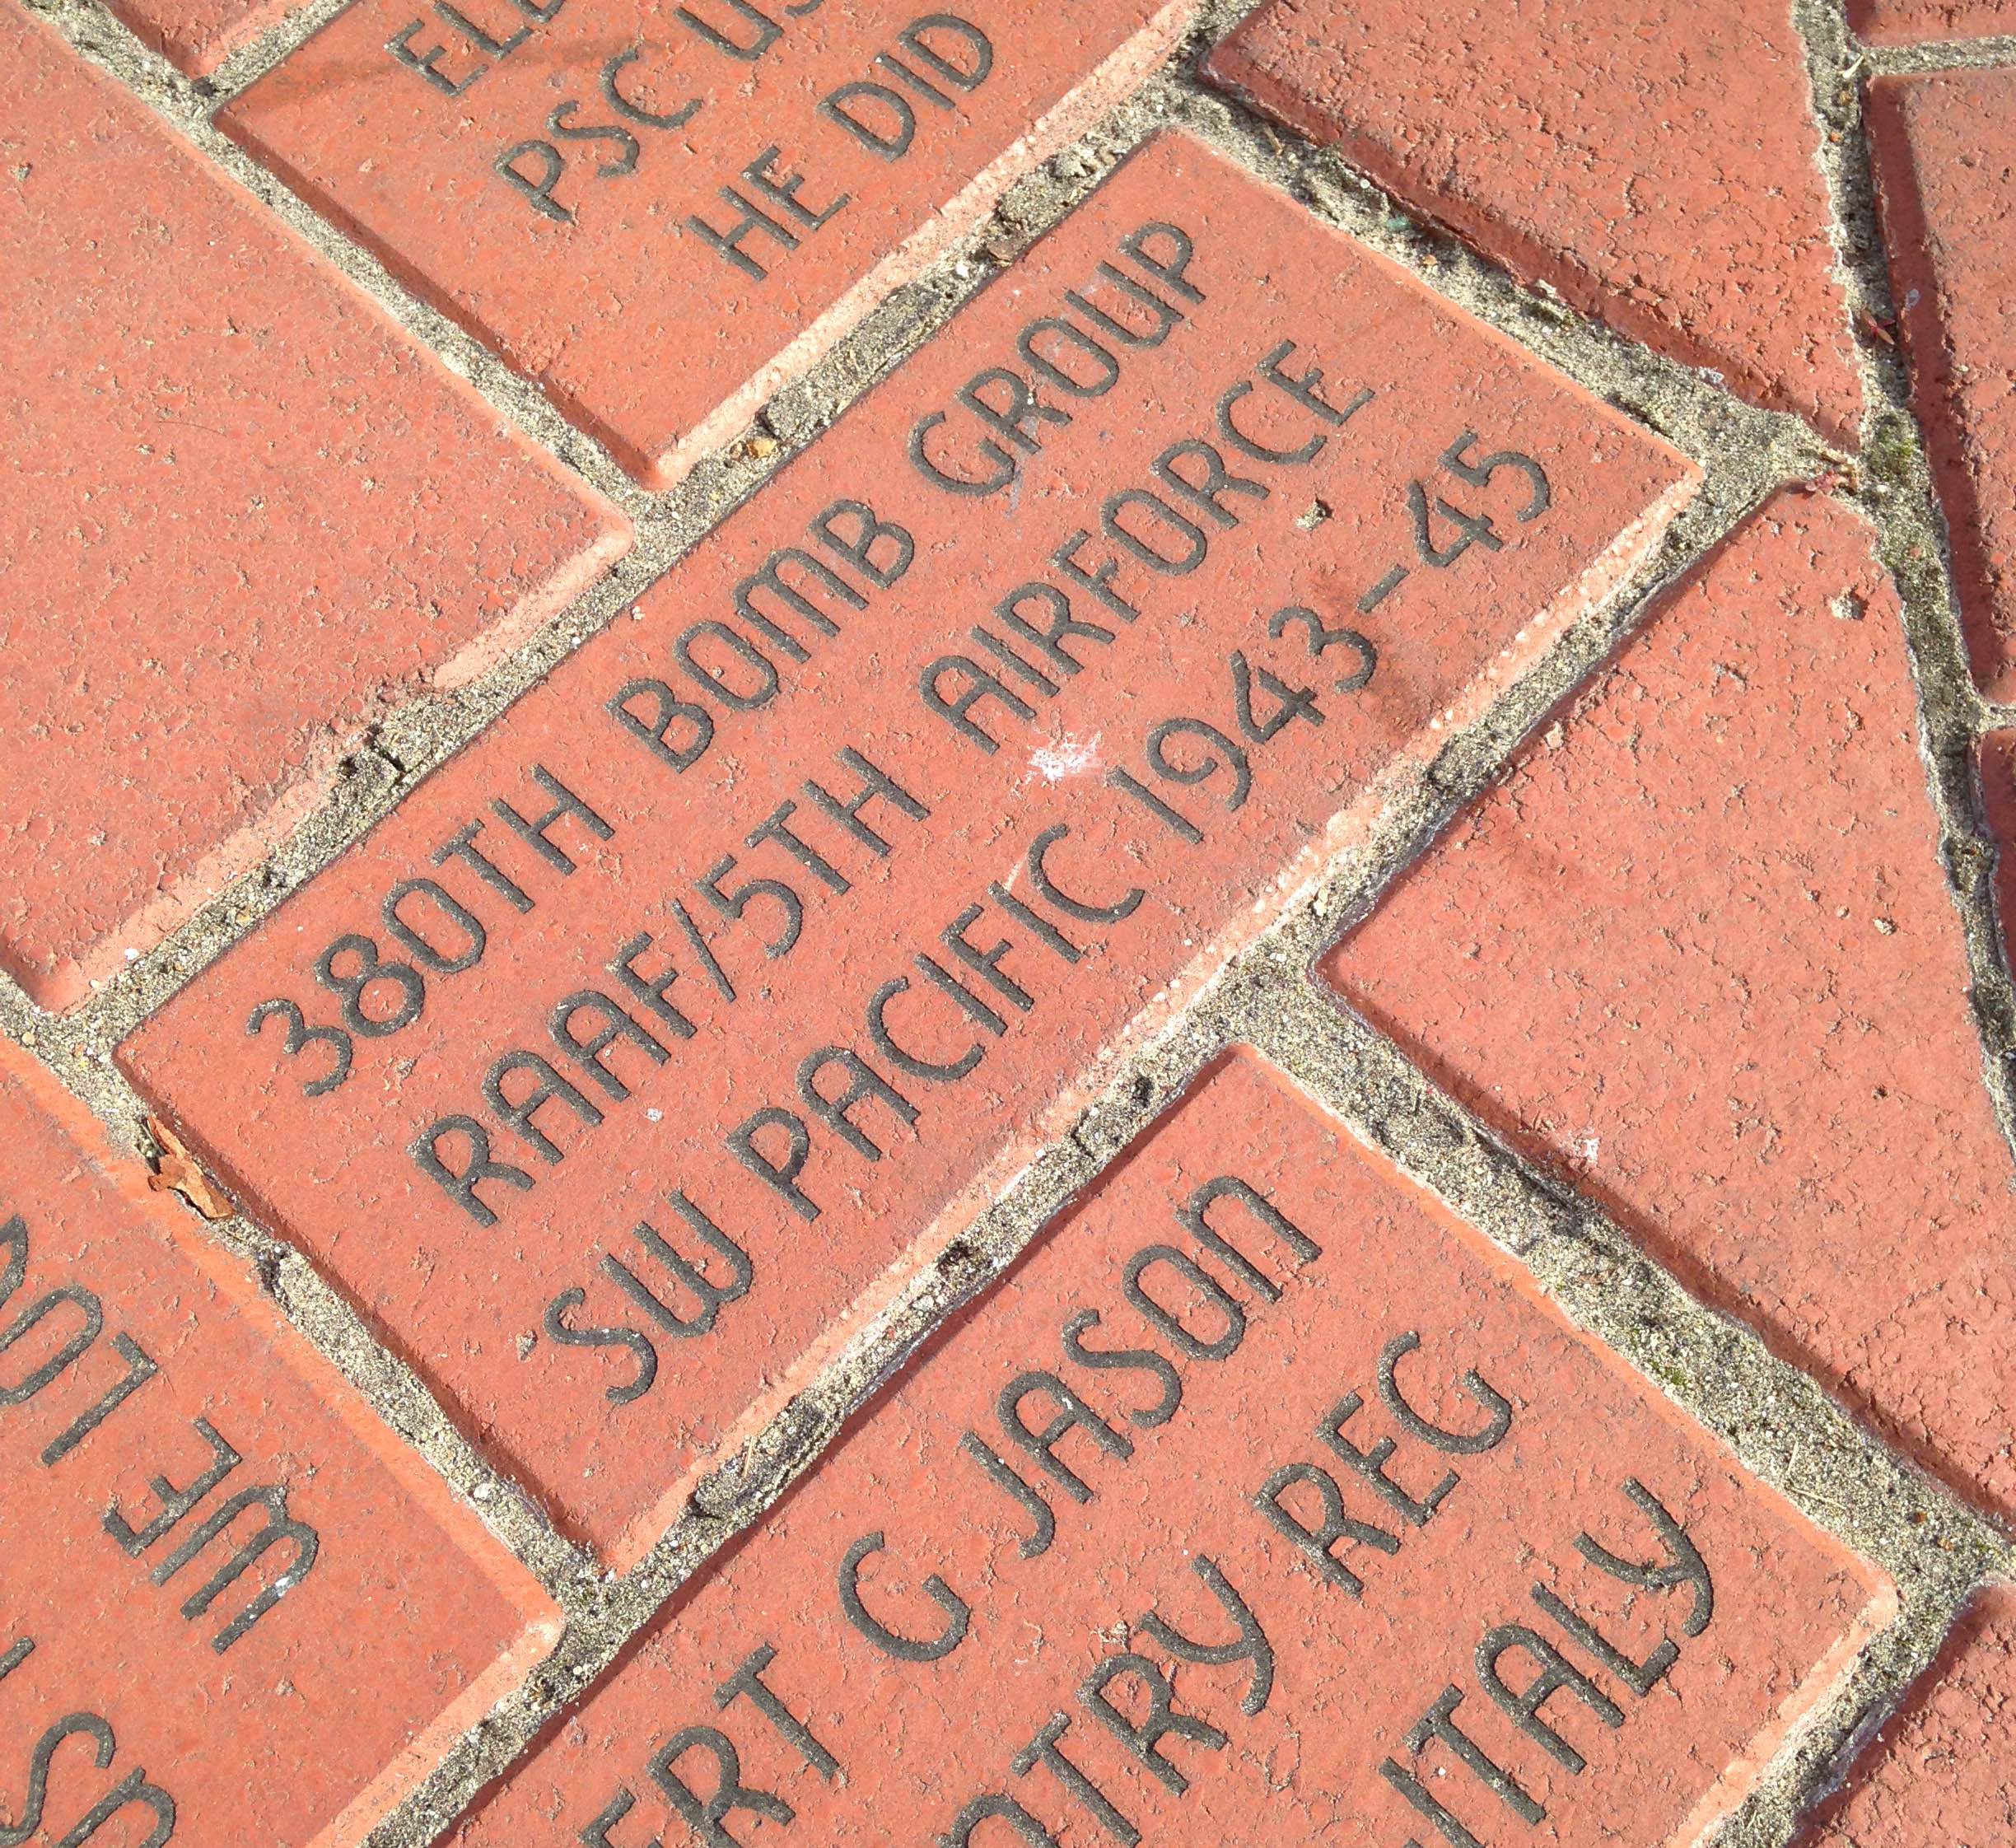 380th brick